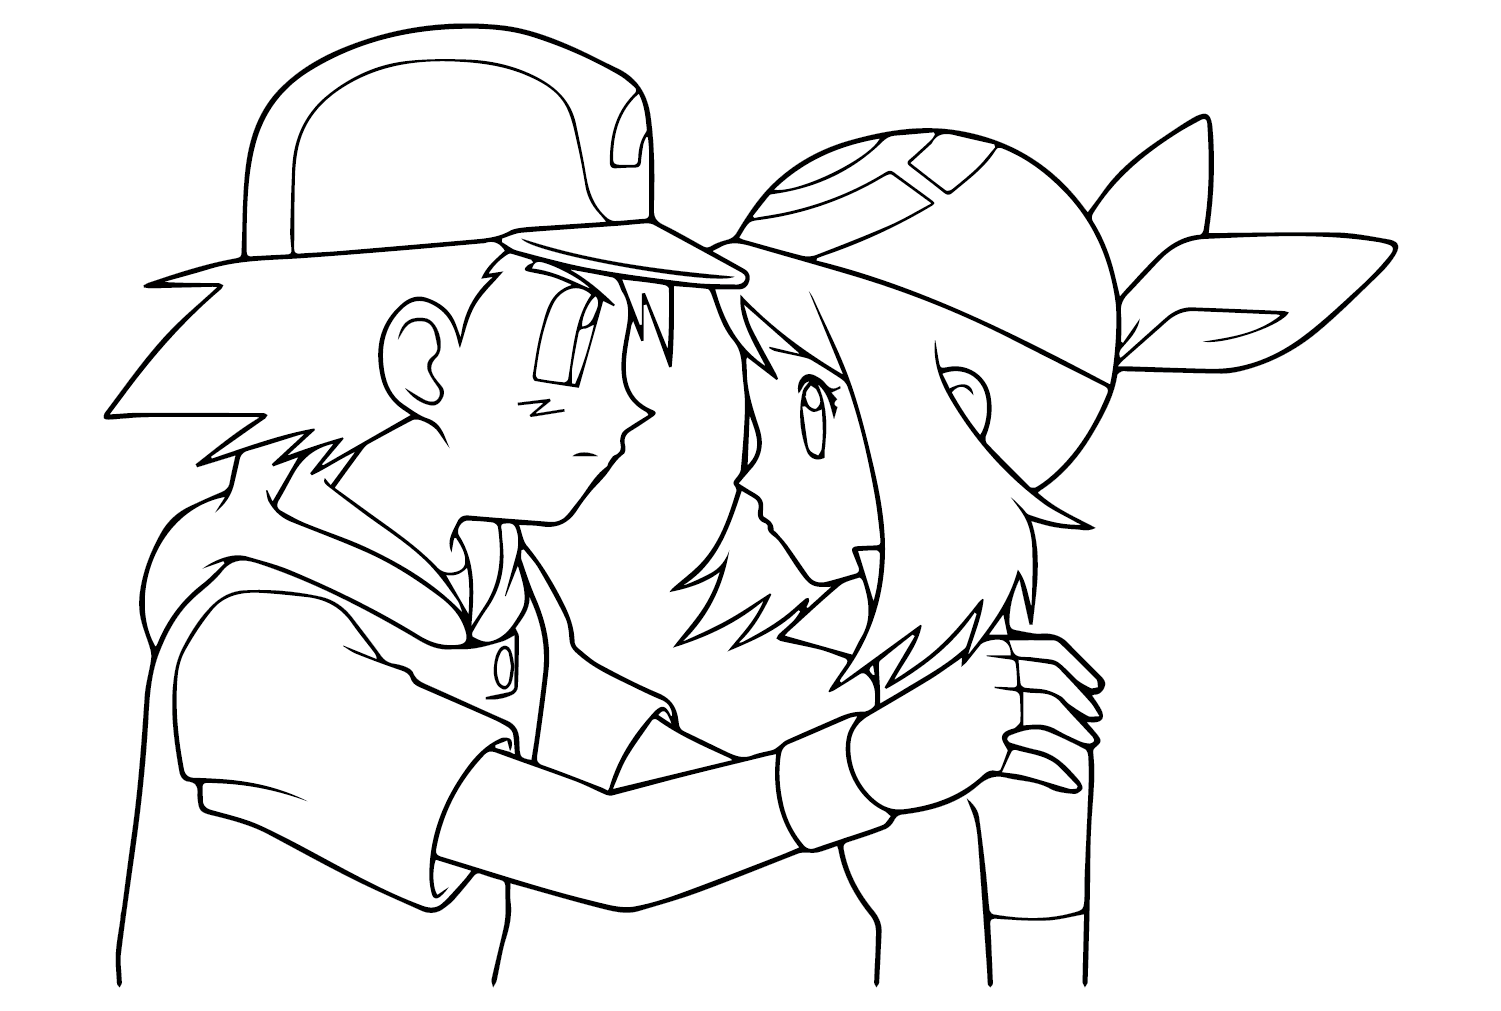 Ash and May Pokemon Coloring Page from Ash Ketchum